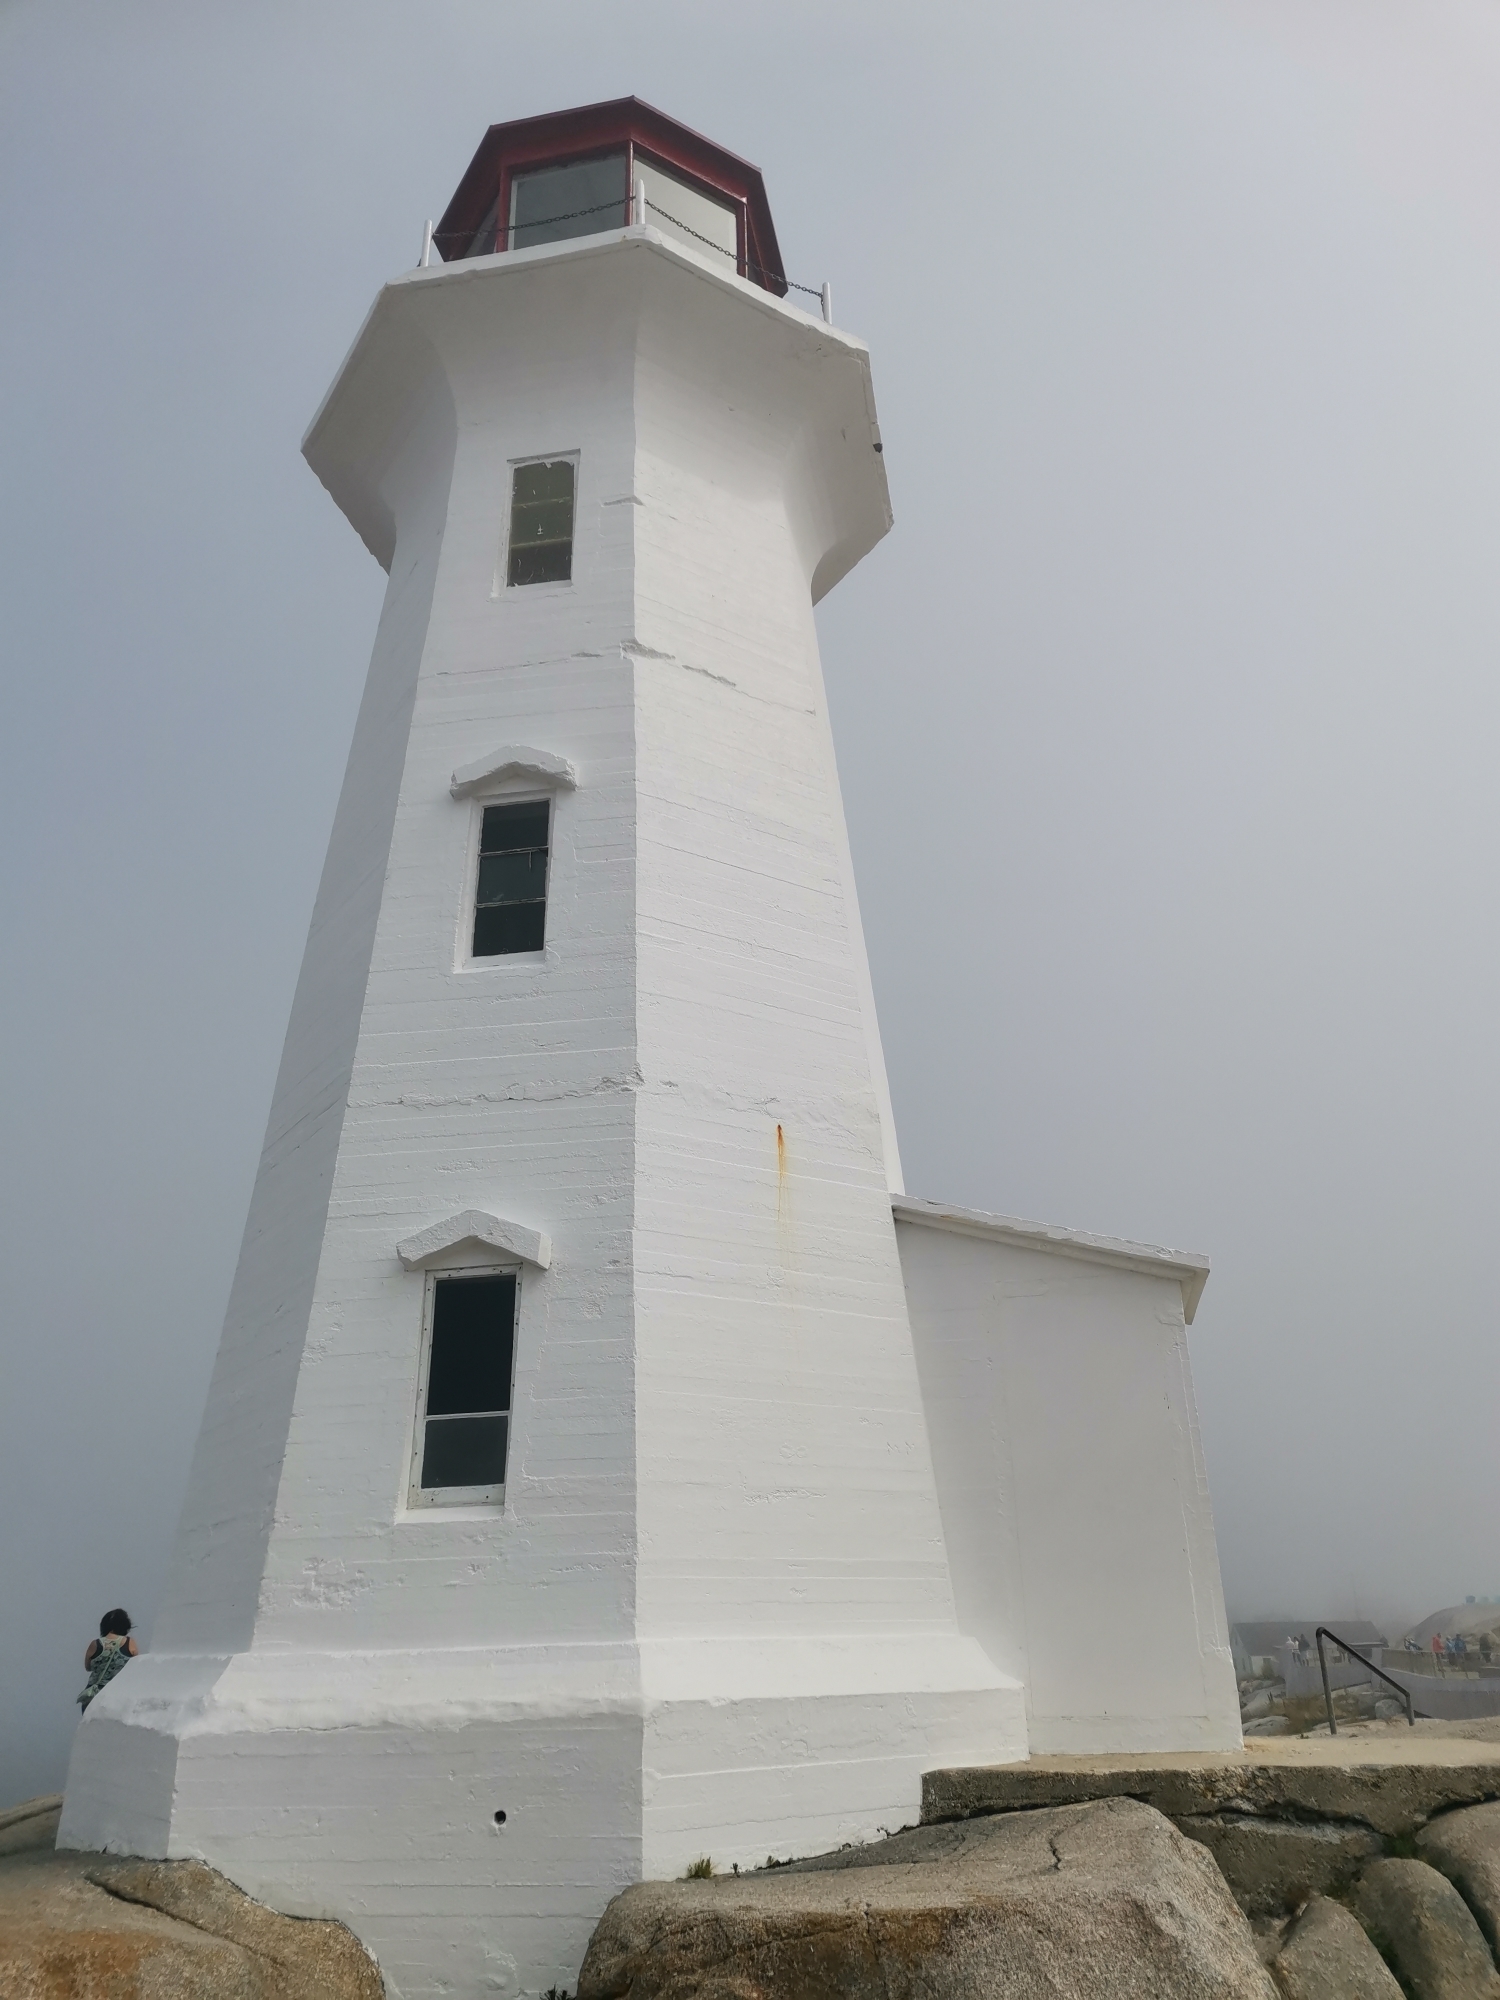 Peggys cove lighthouse